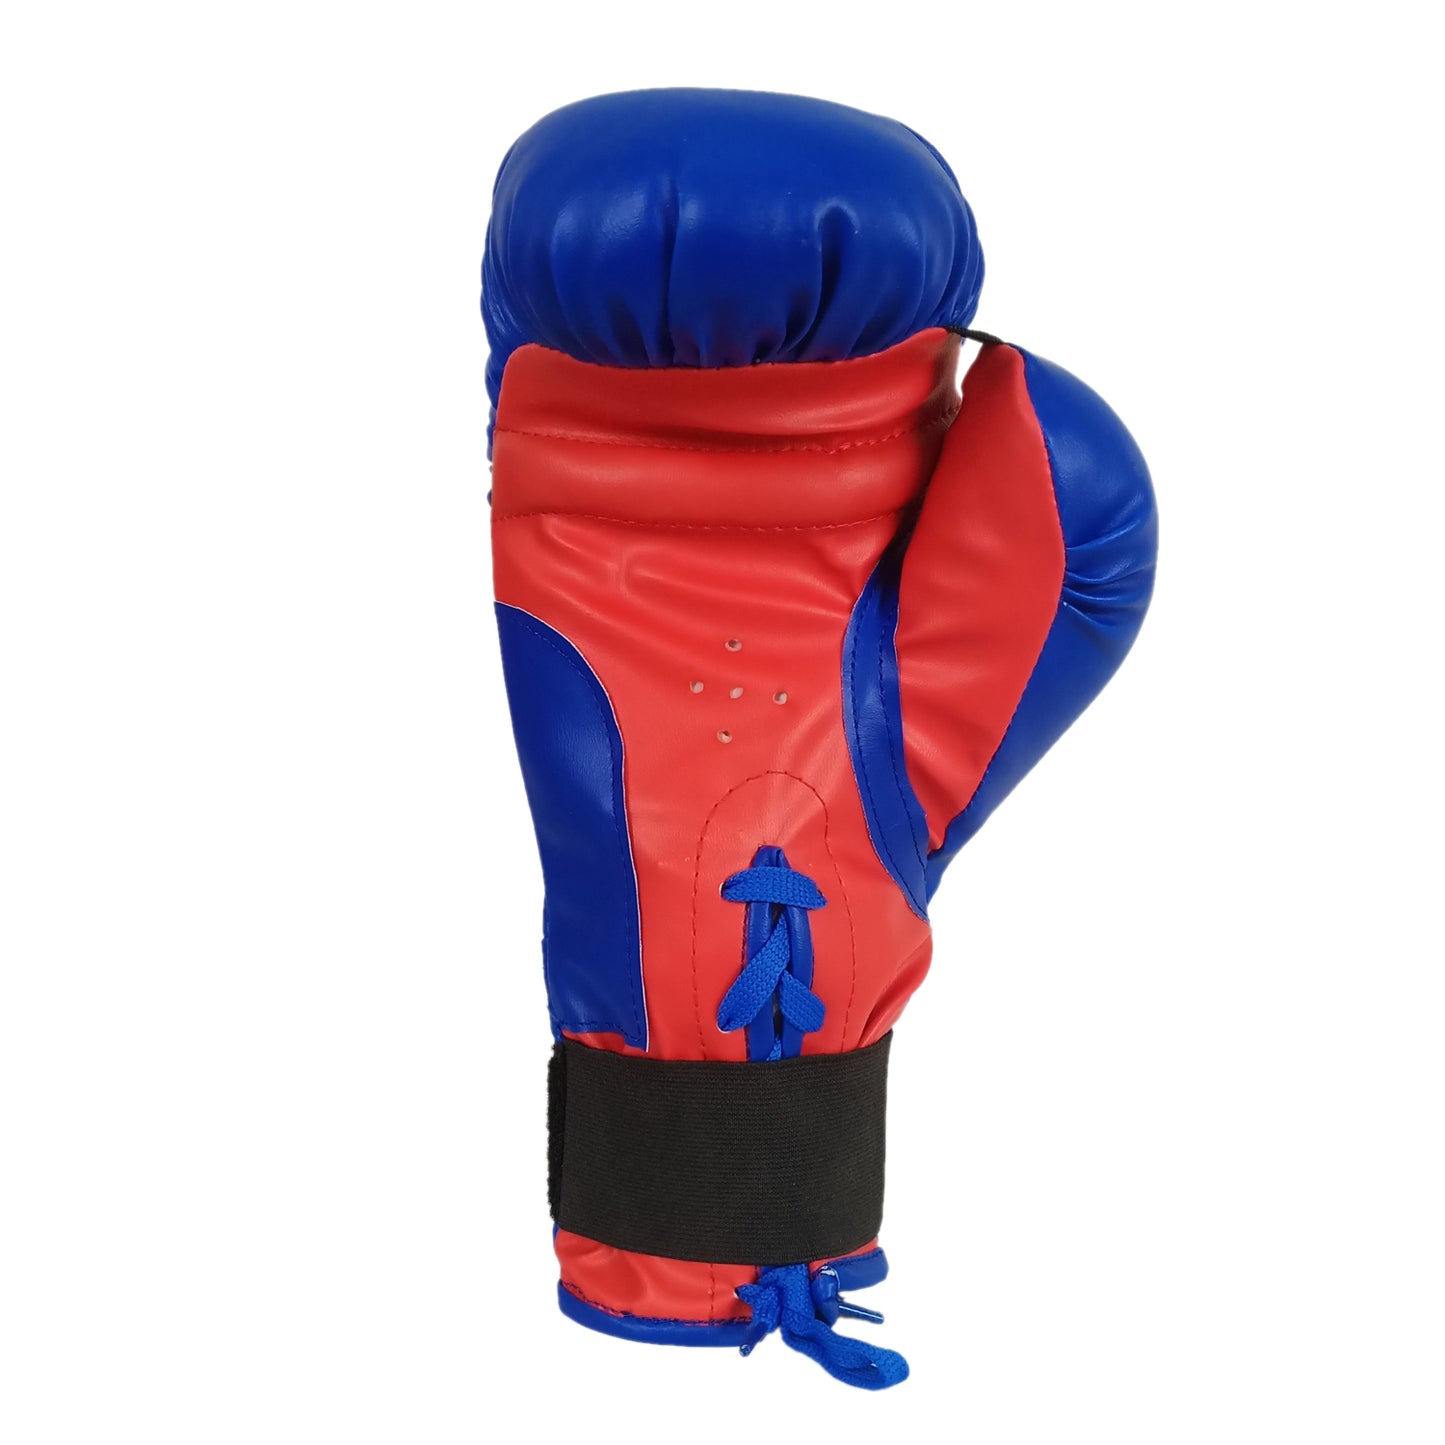 Prokick Winner Boxing Gloves - Best Price online Prokicksports.com